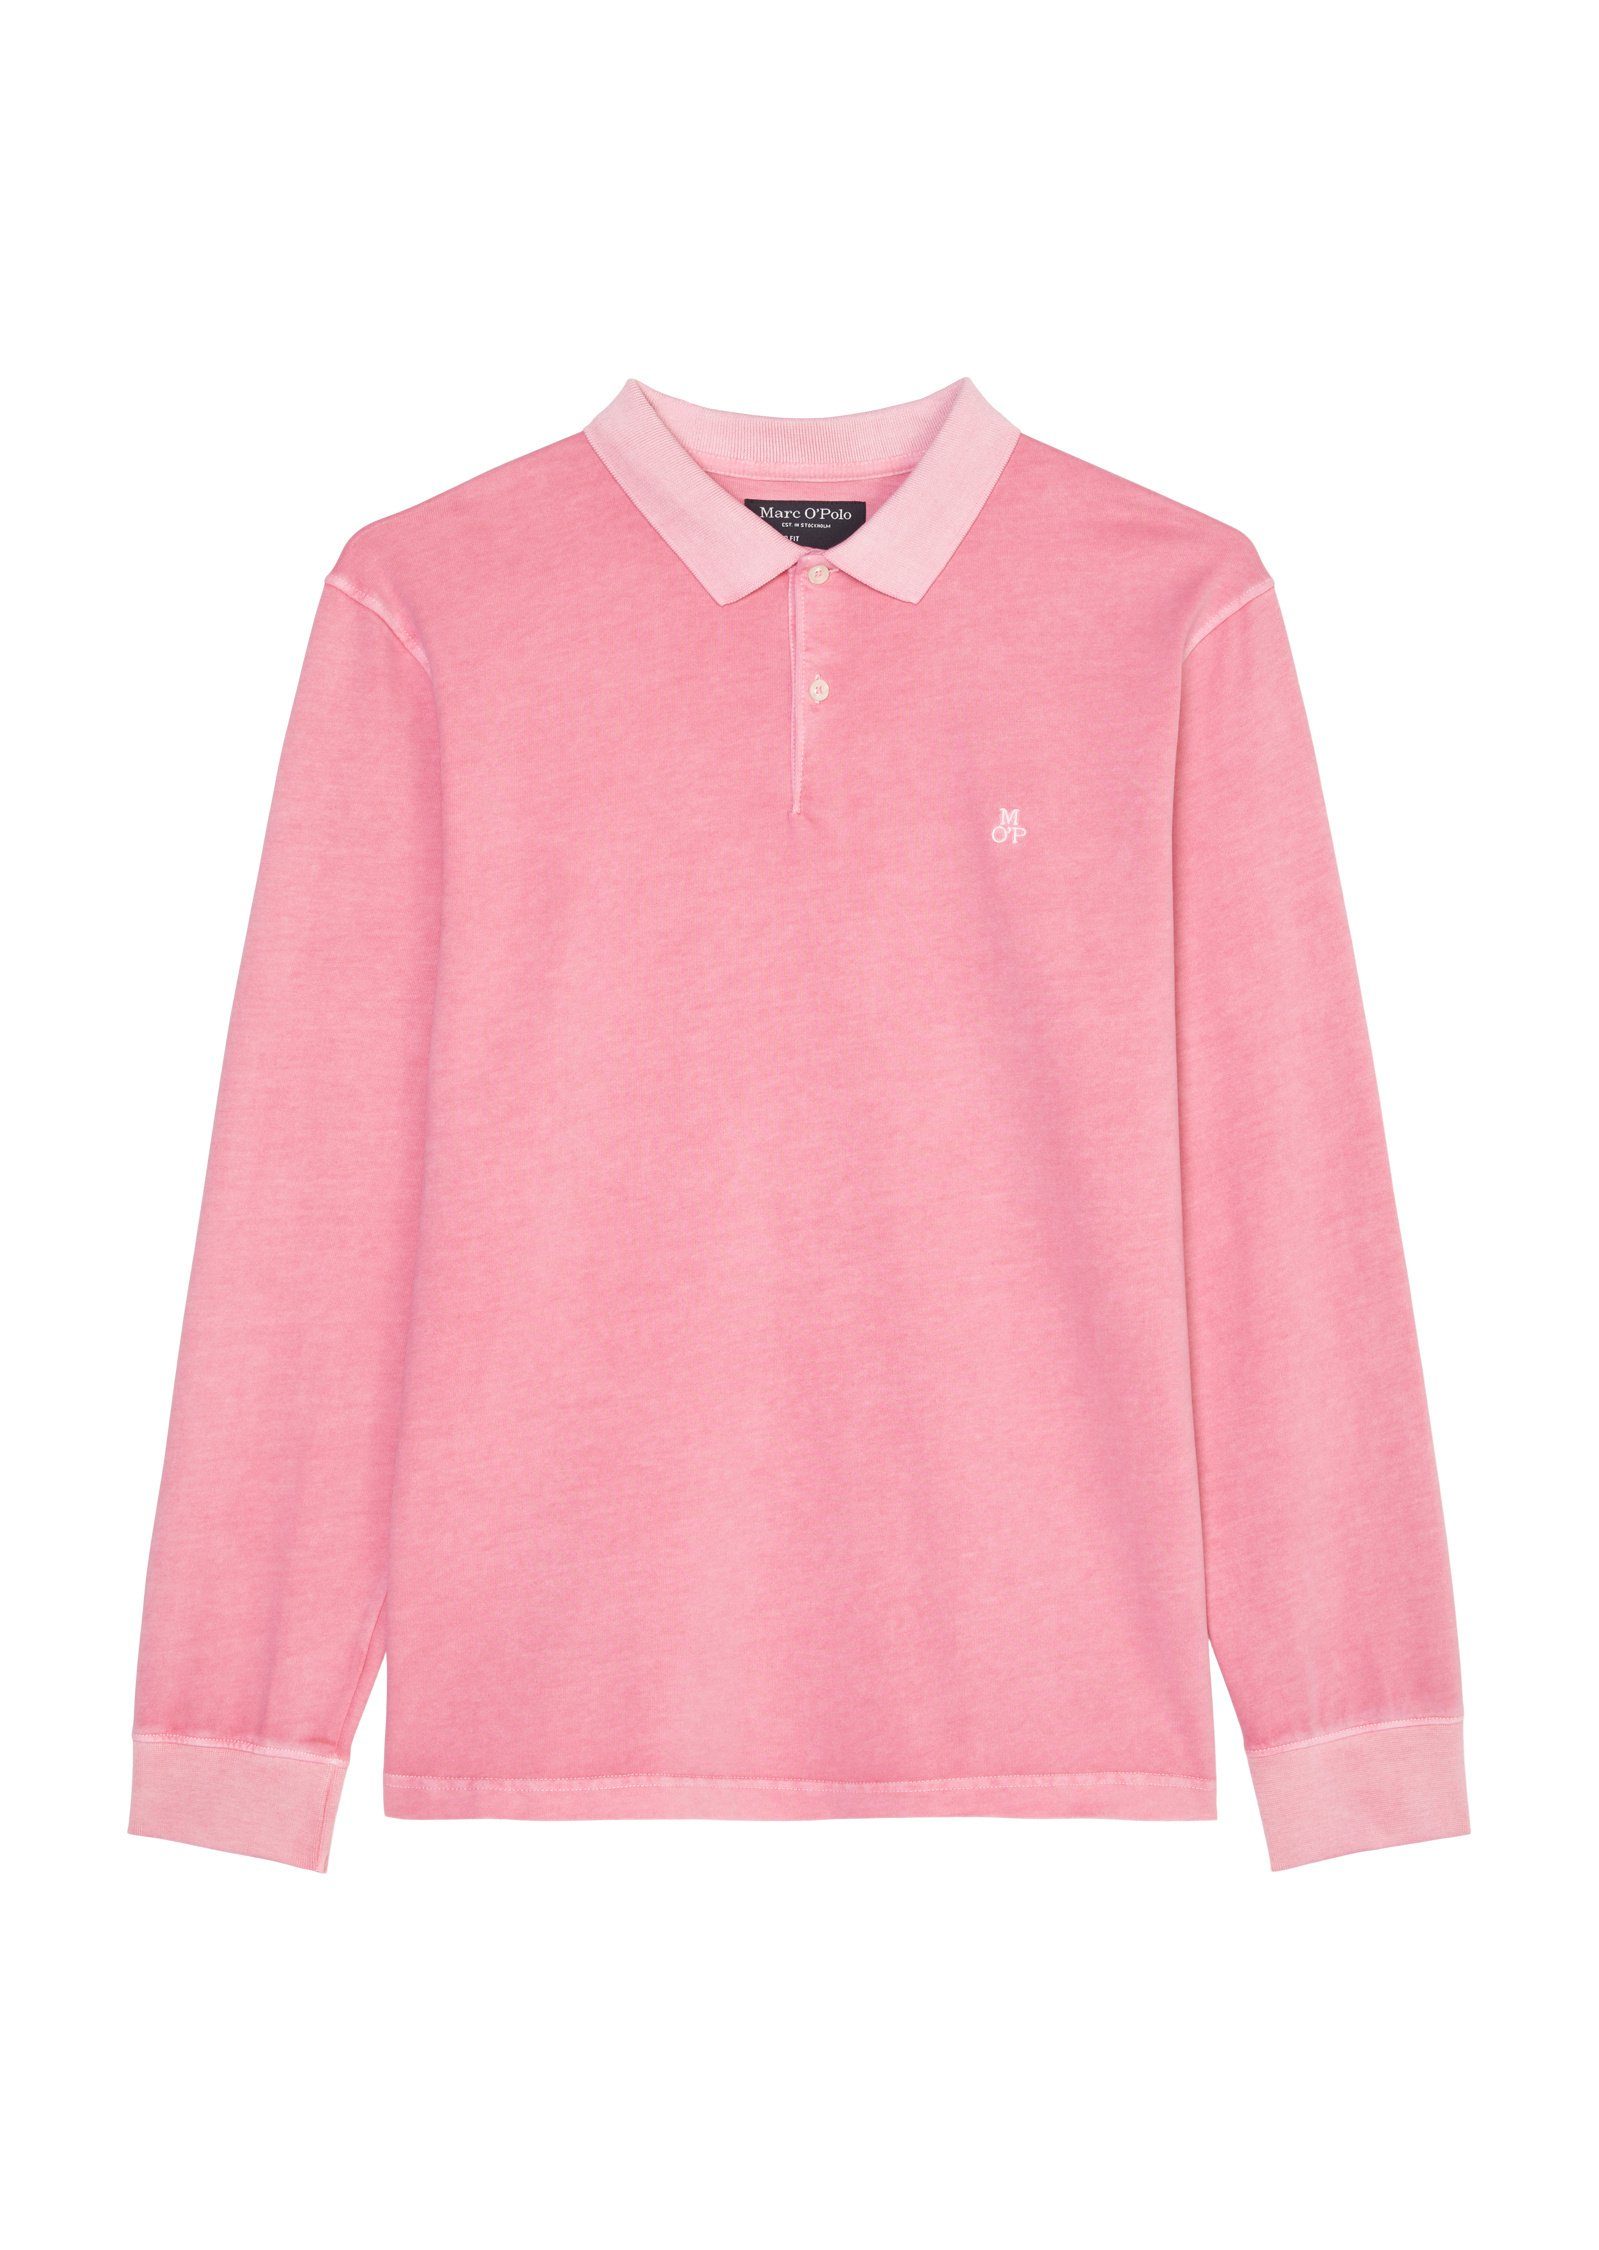 Marc O'Polo Soft-Touch-Jersey-Qualität rosa Langarm-Poloshirt schwerer in